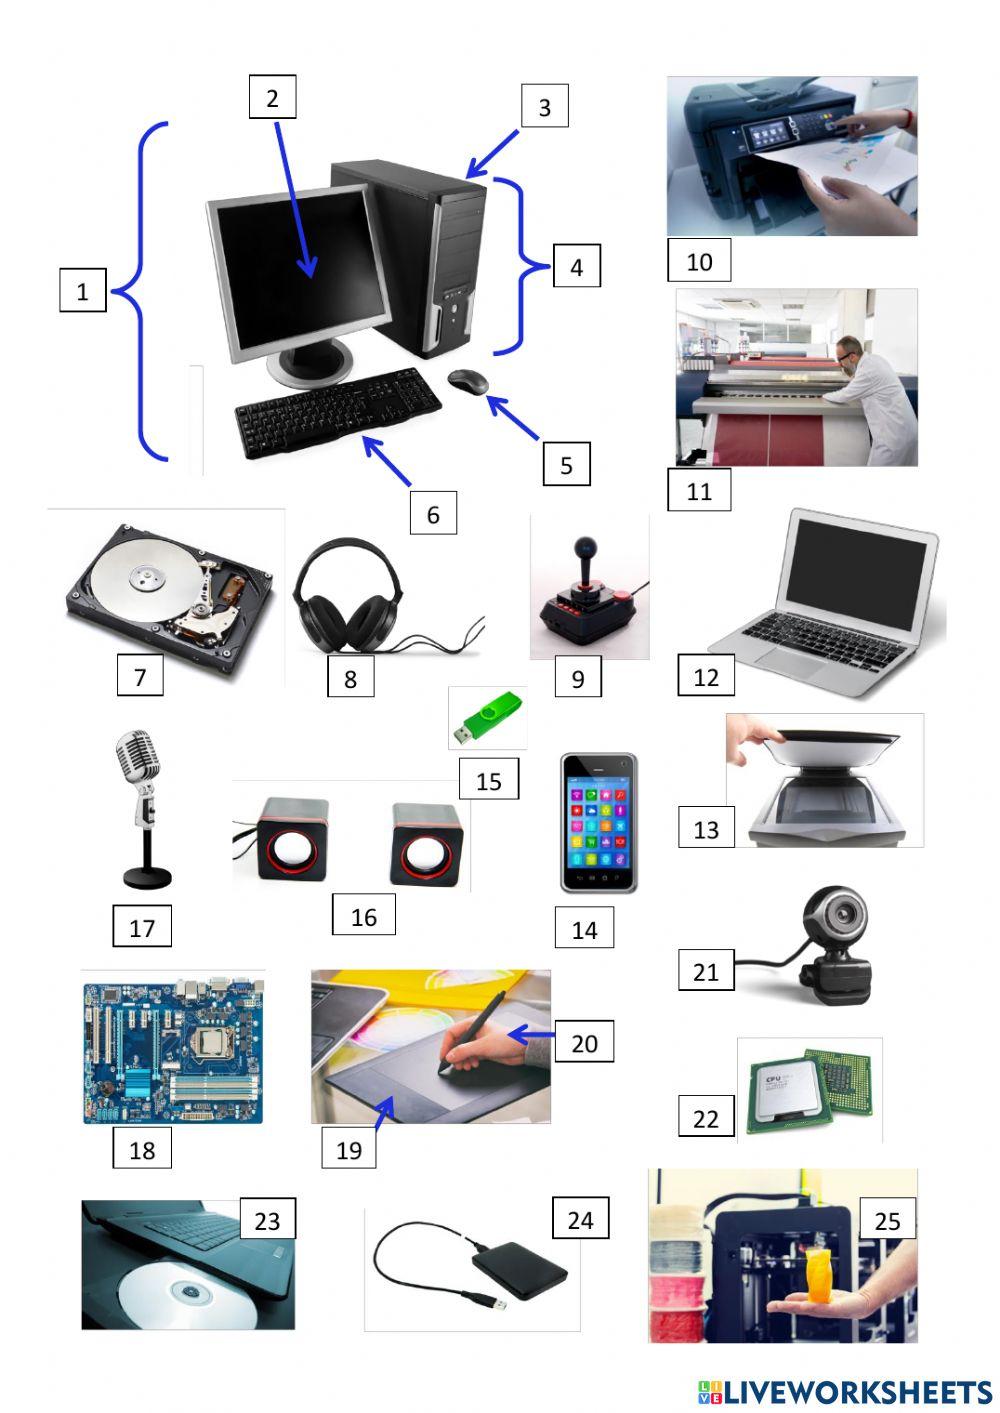 Computer hardware & software